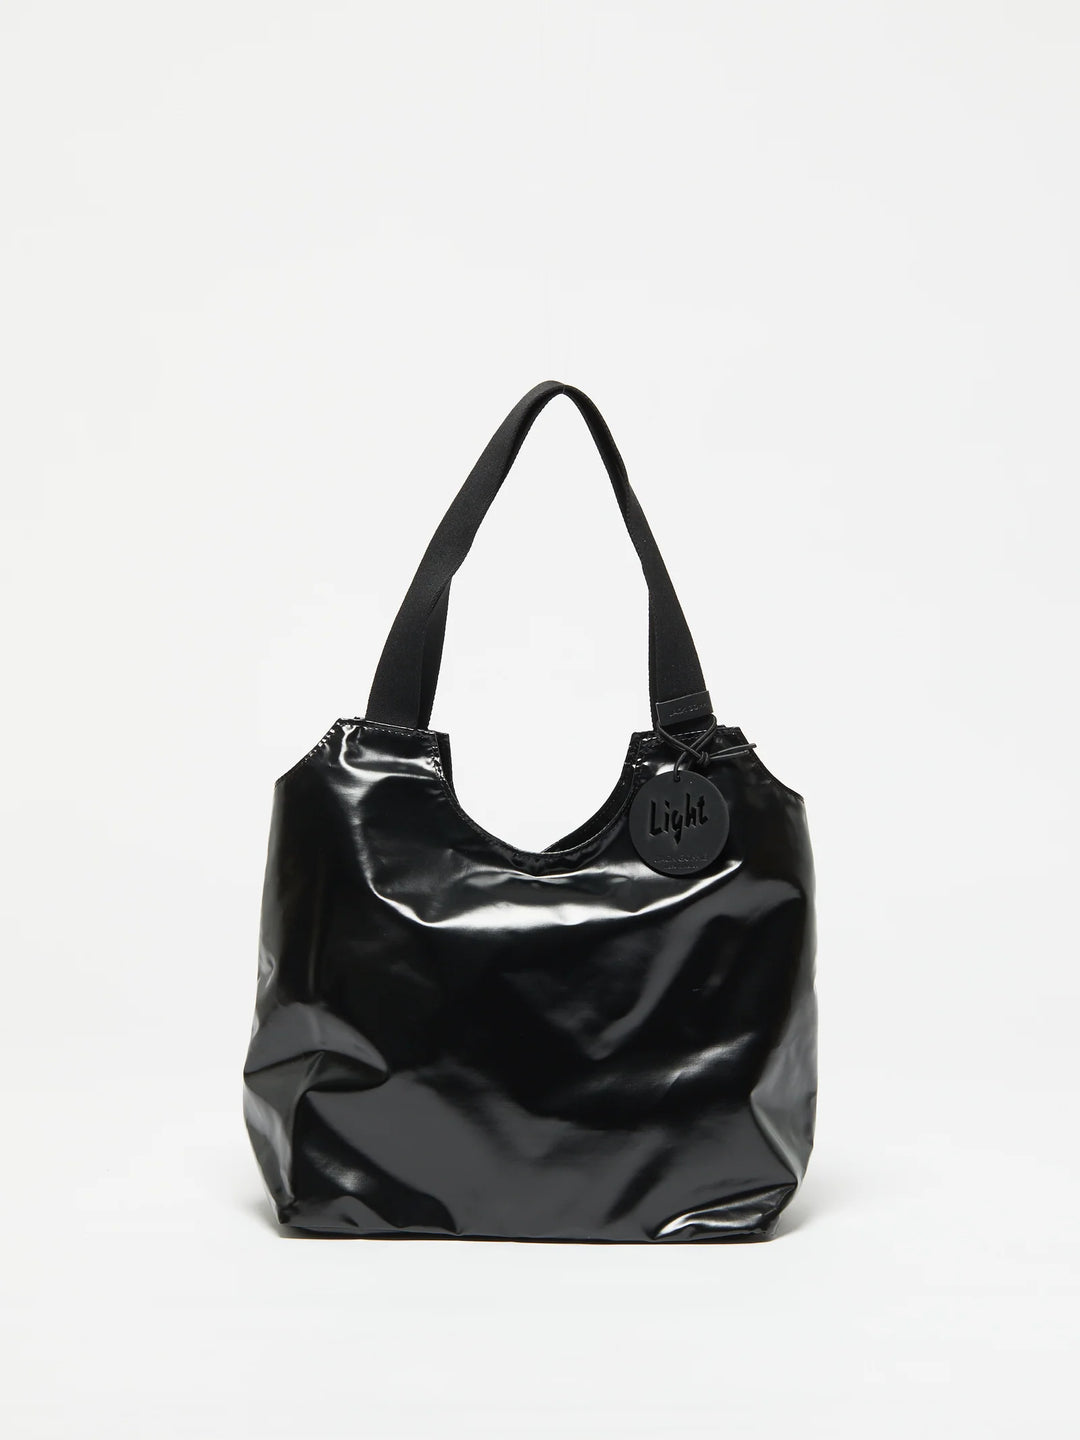 Jack Gomme Tilly Light Shopping Bag - Black